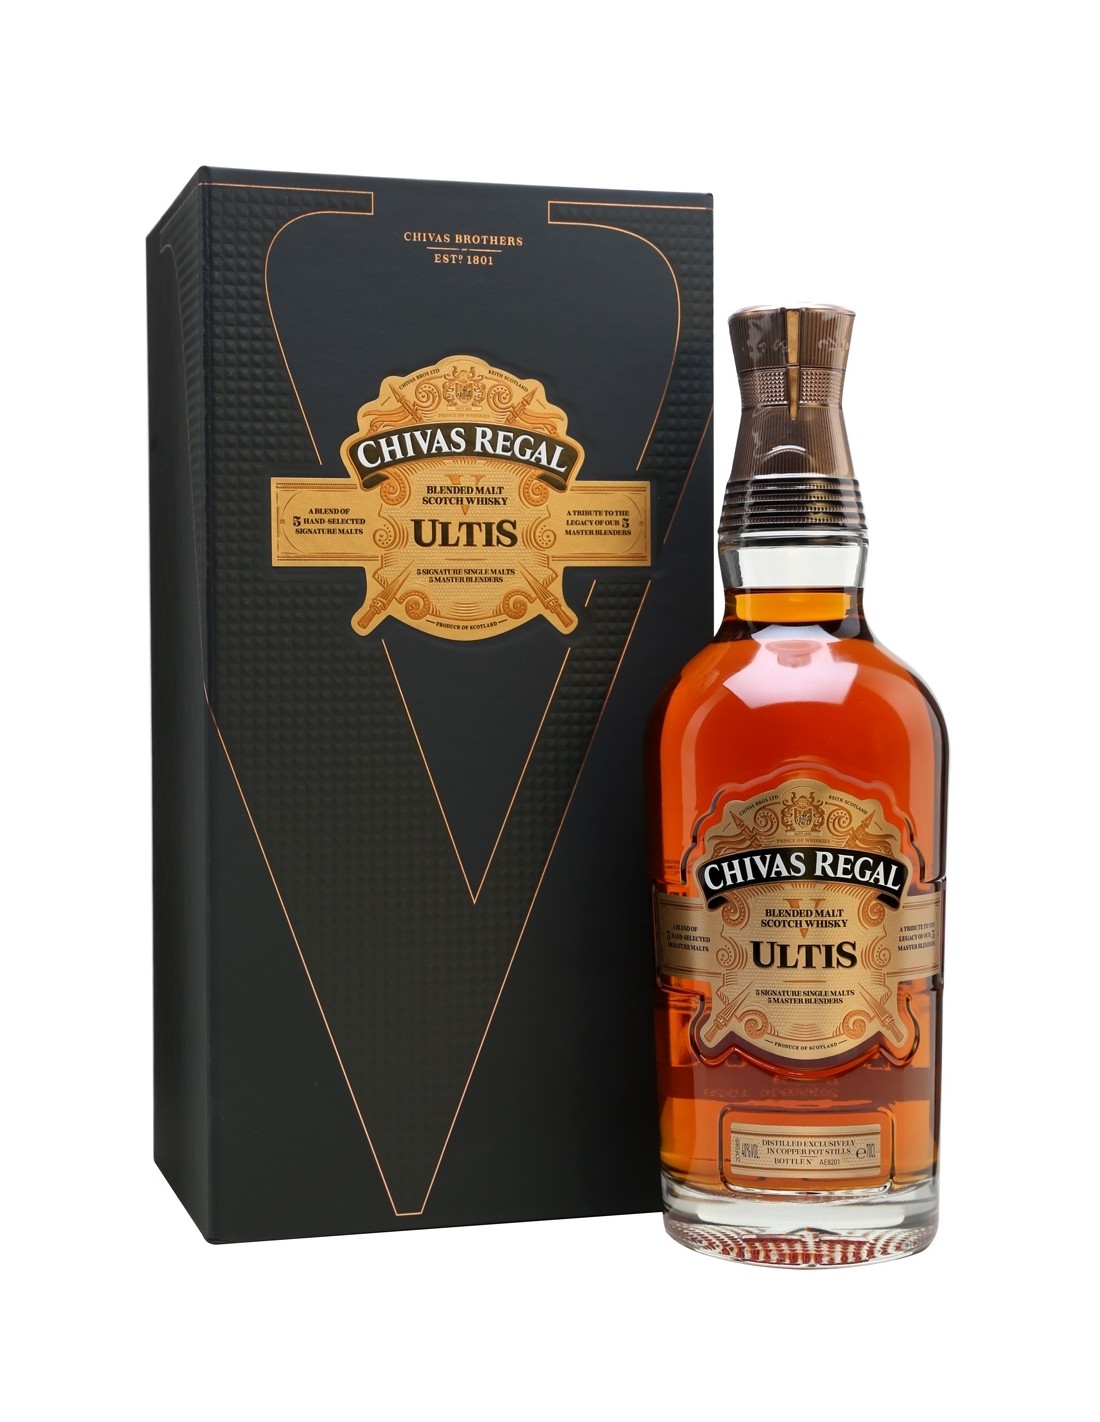 Whisky Chivas Regal Ultis 0.7L, 40% alc., Scotia